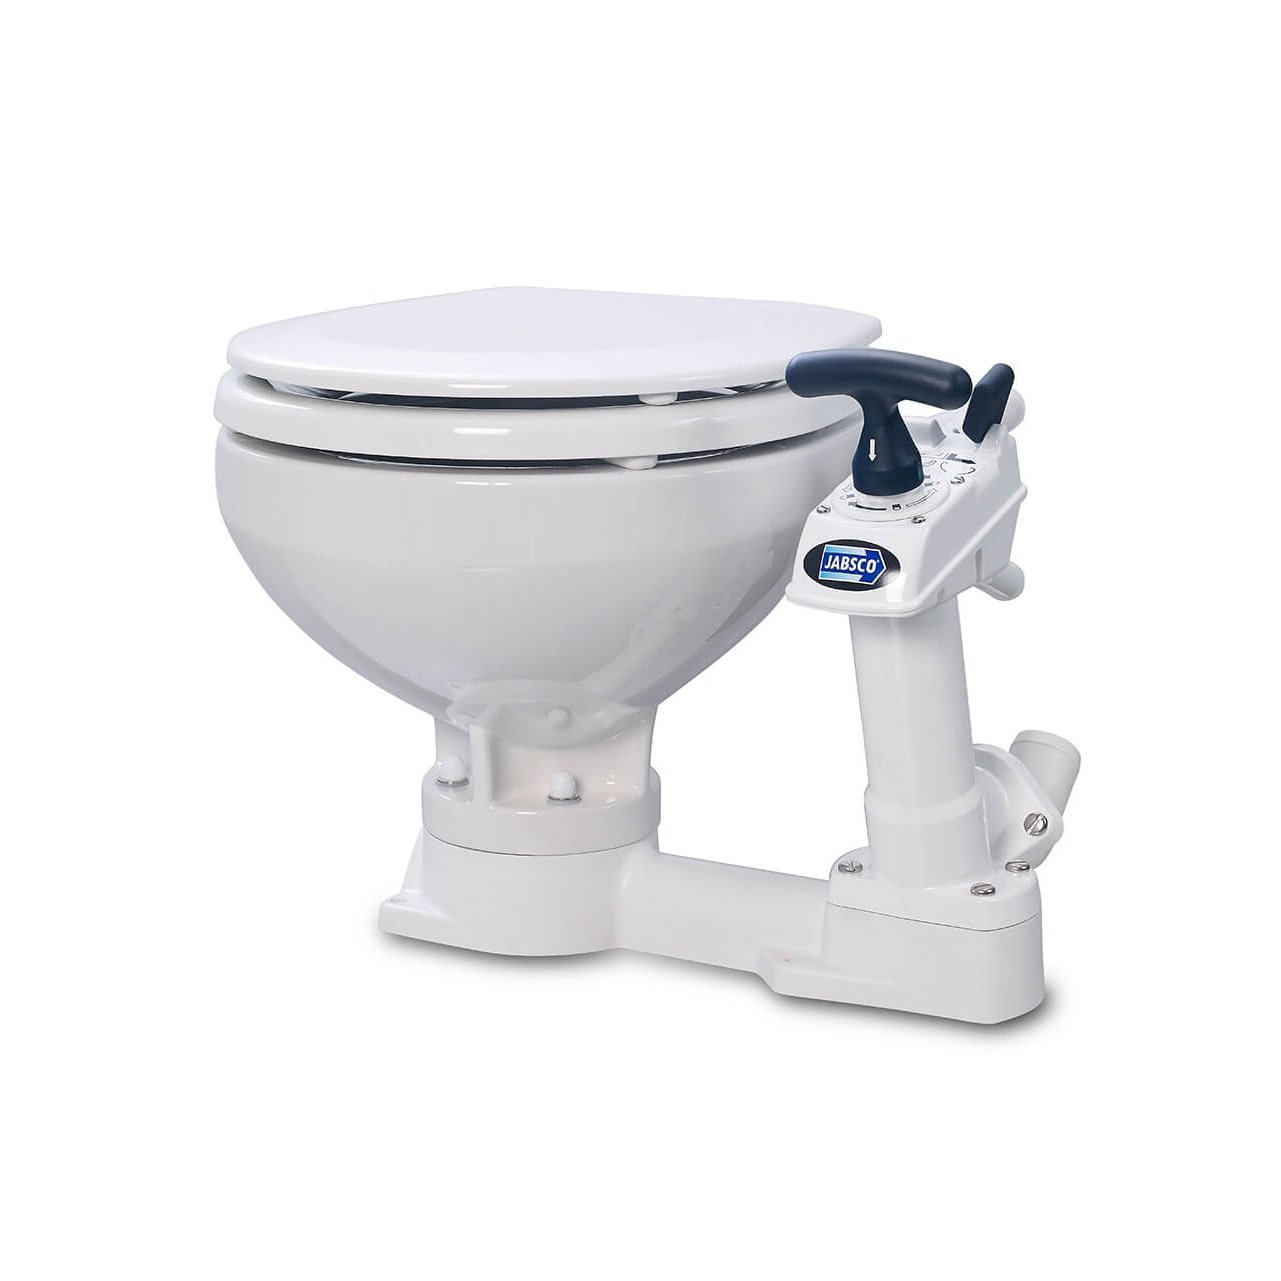 Jabsco Compact Bowl Manual Toilet With Free Aqua Soft Toilet Rolls